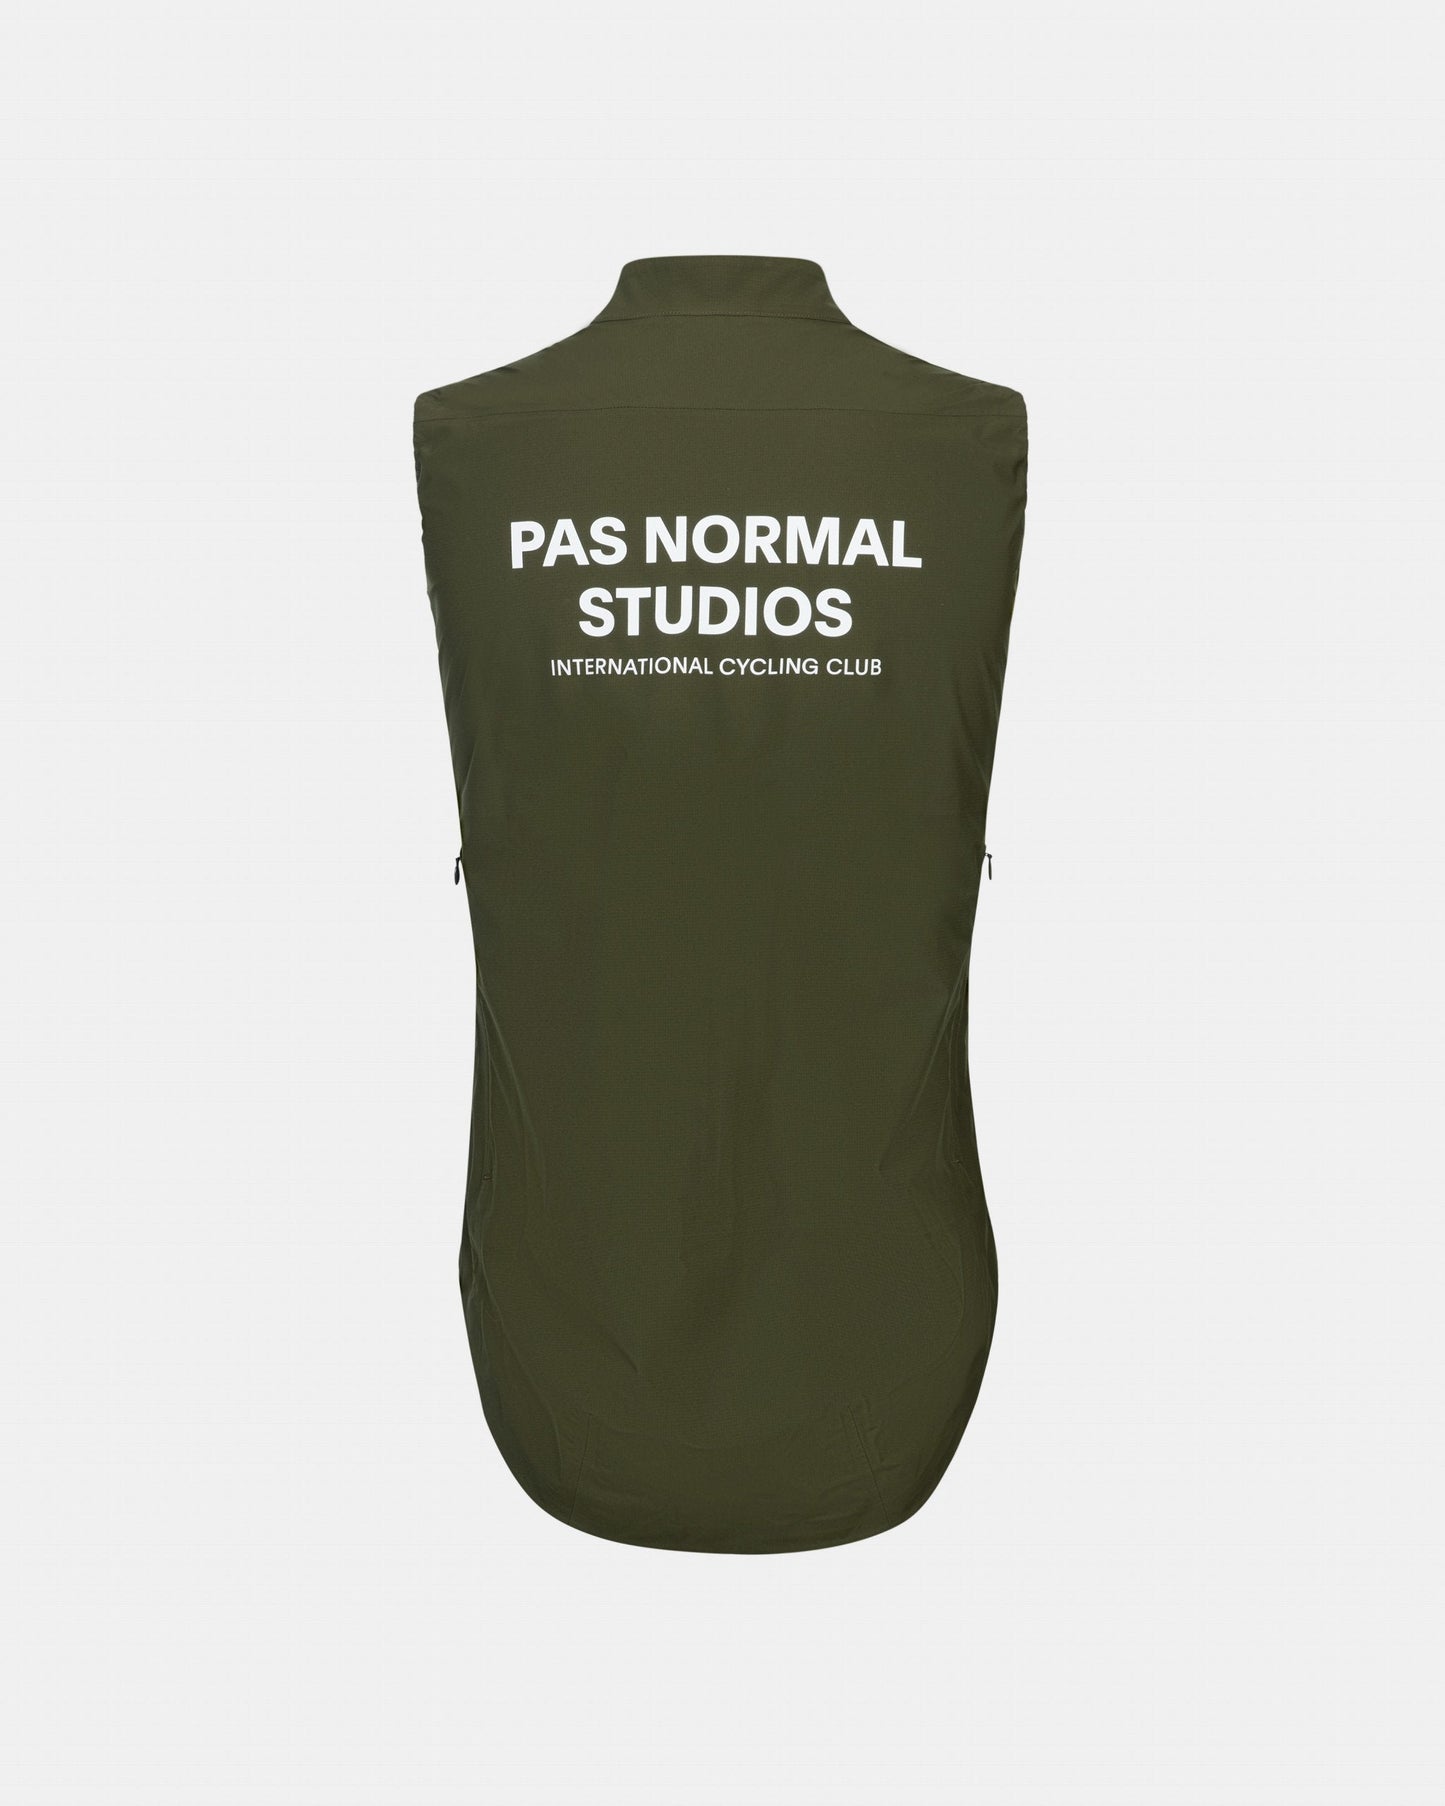 Pas Normal Studios - Veste Shield Homme Olive Vestes Pas Normal Studios 